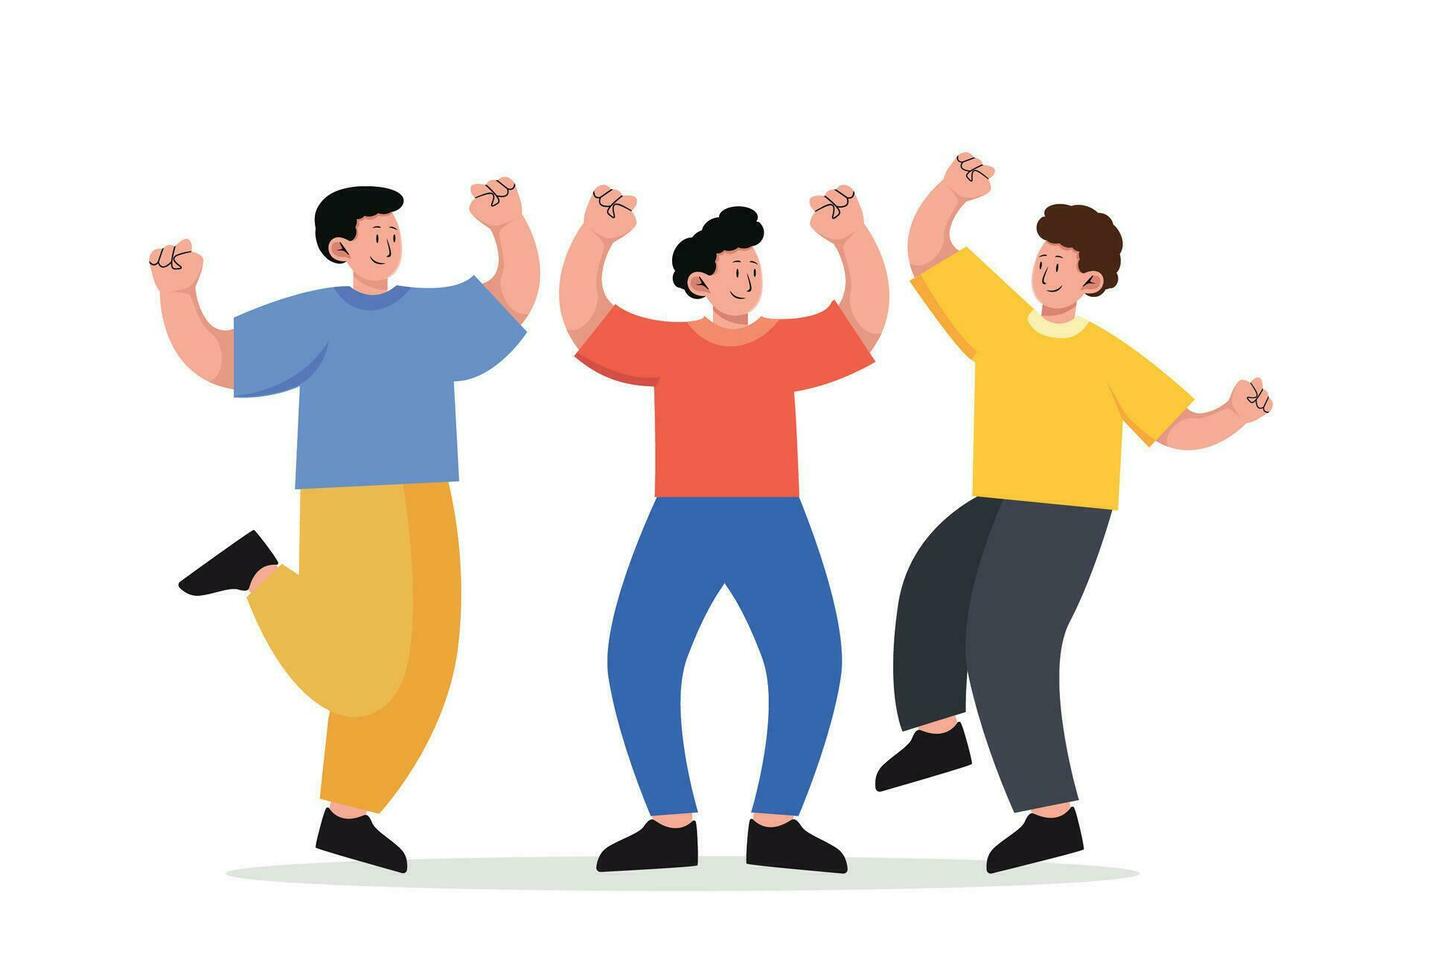 Happy people celebrating together vector illustration